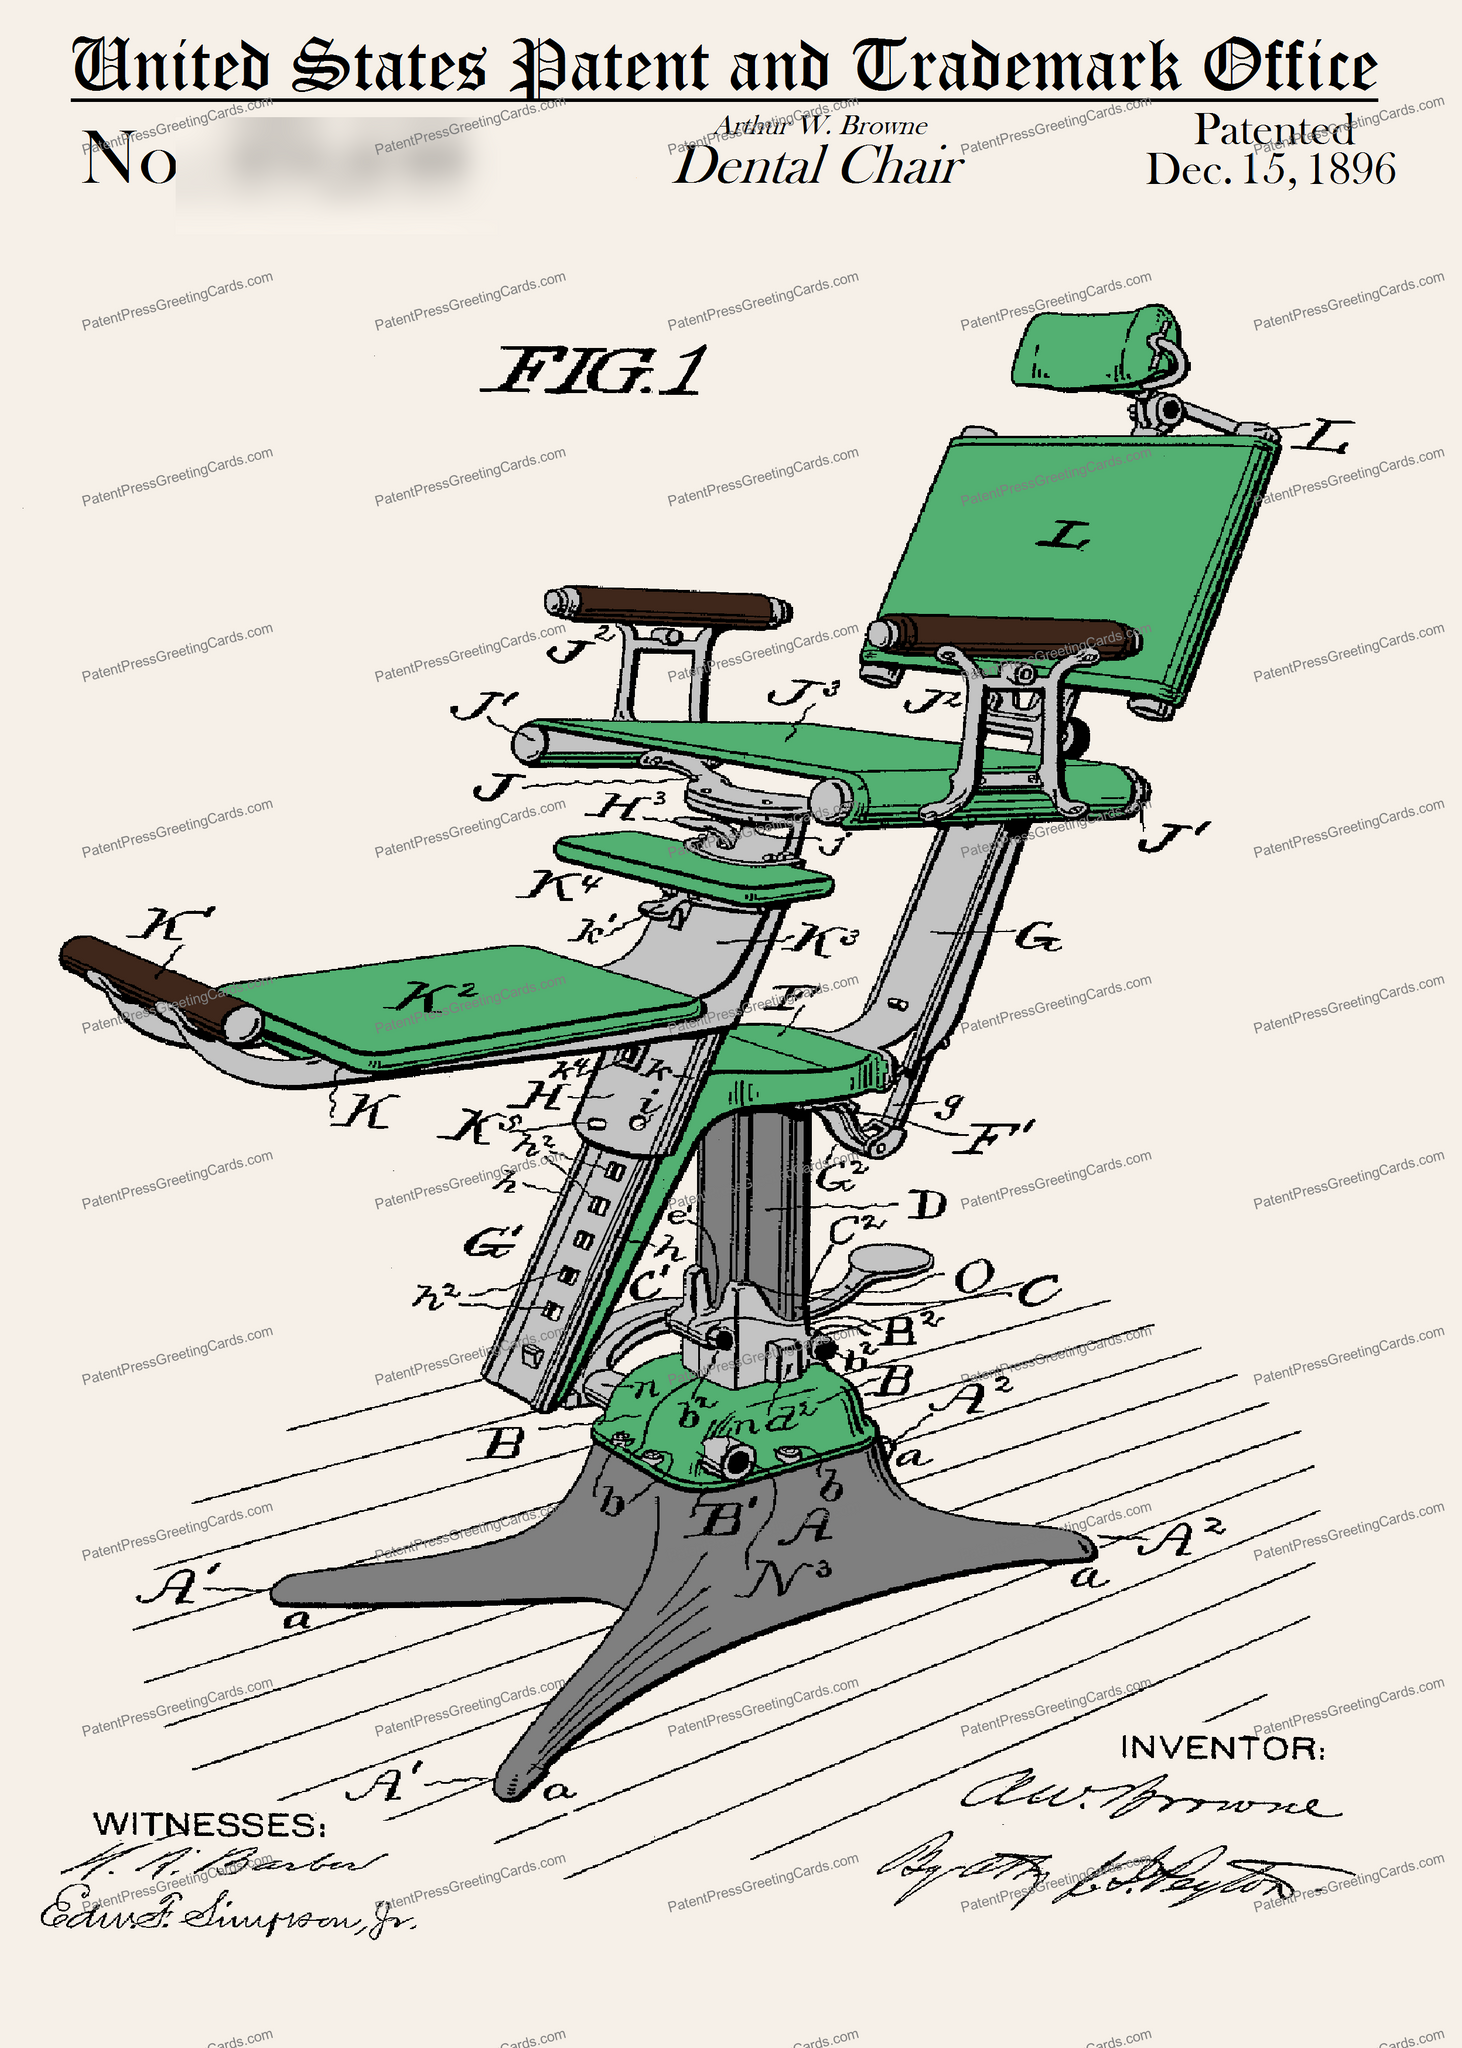 CARD-C971: Dental Chair - Patent Press™